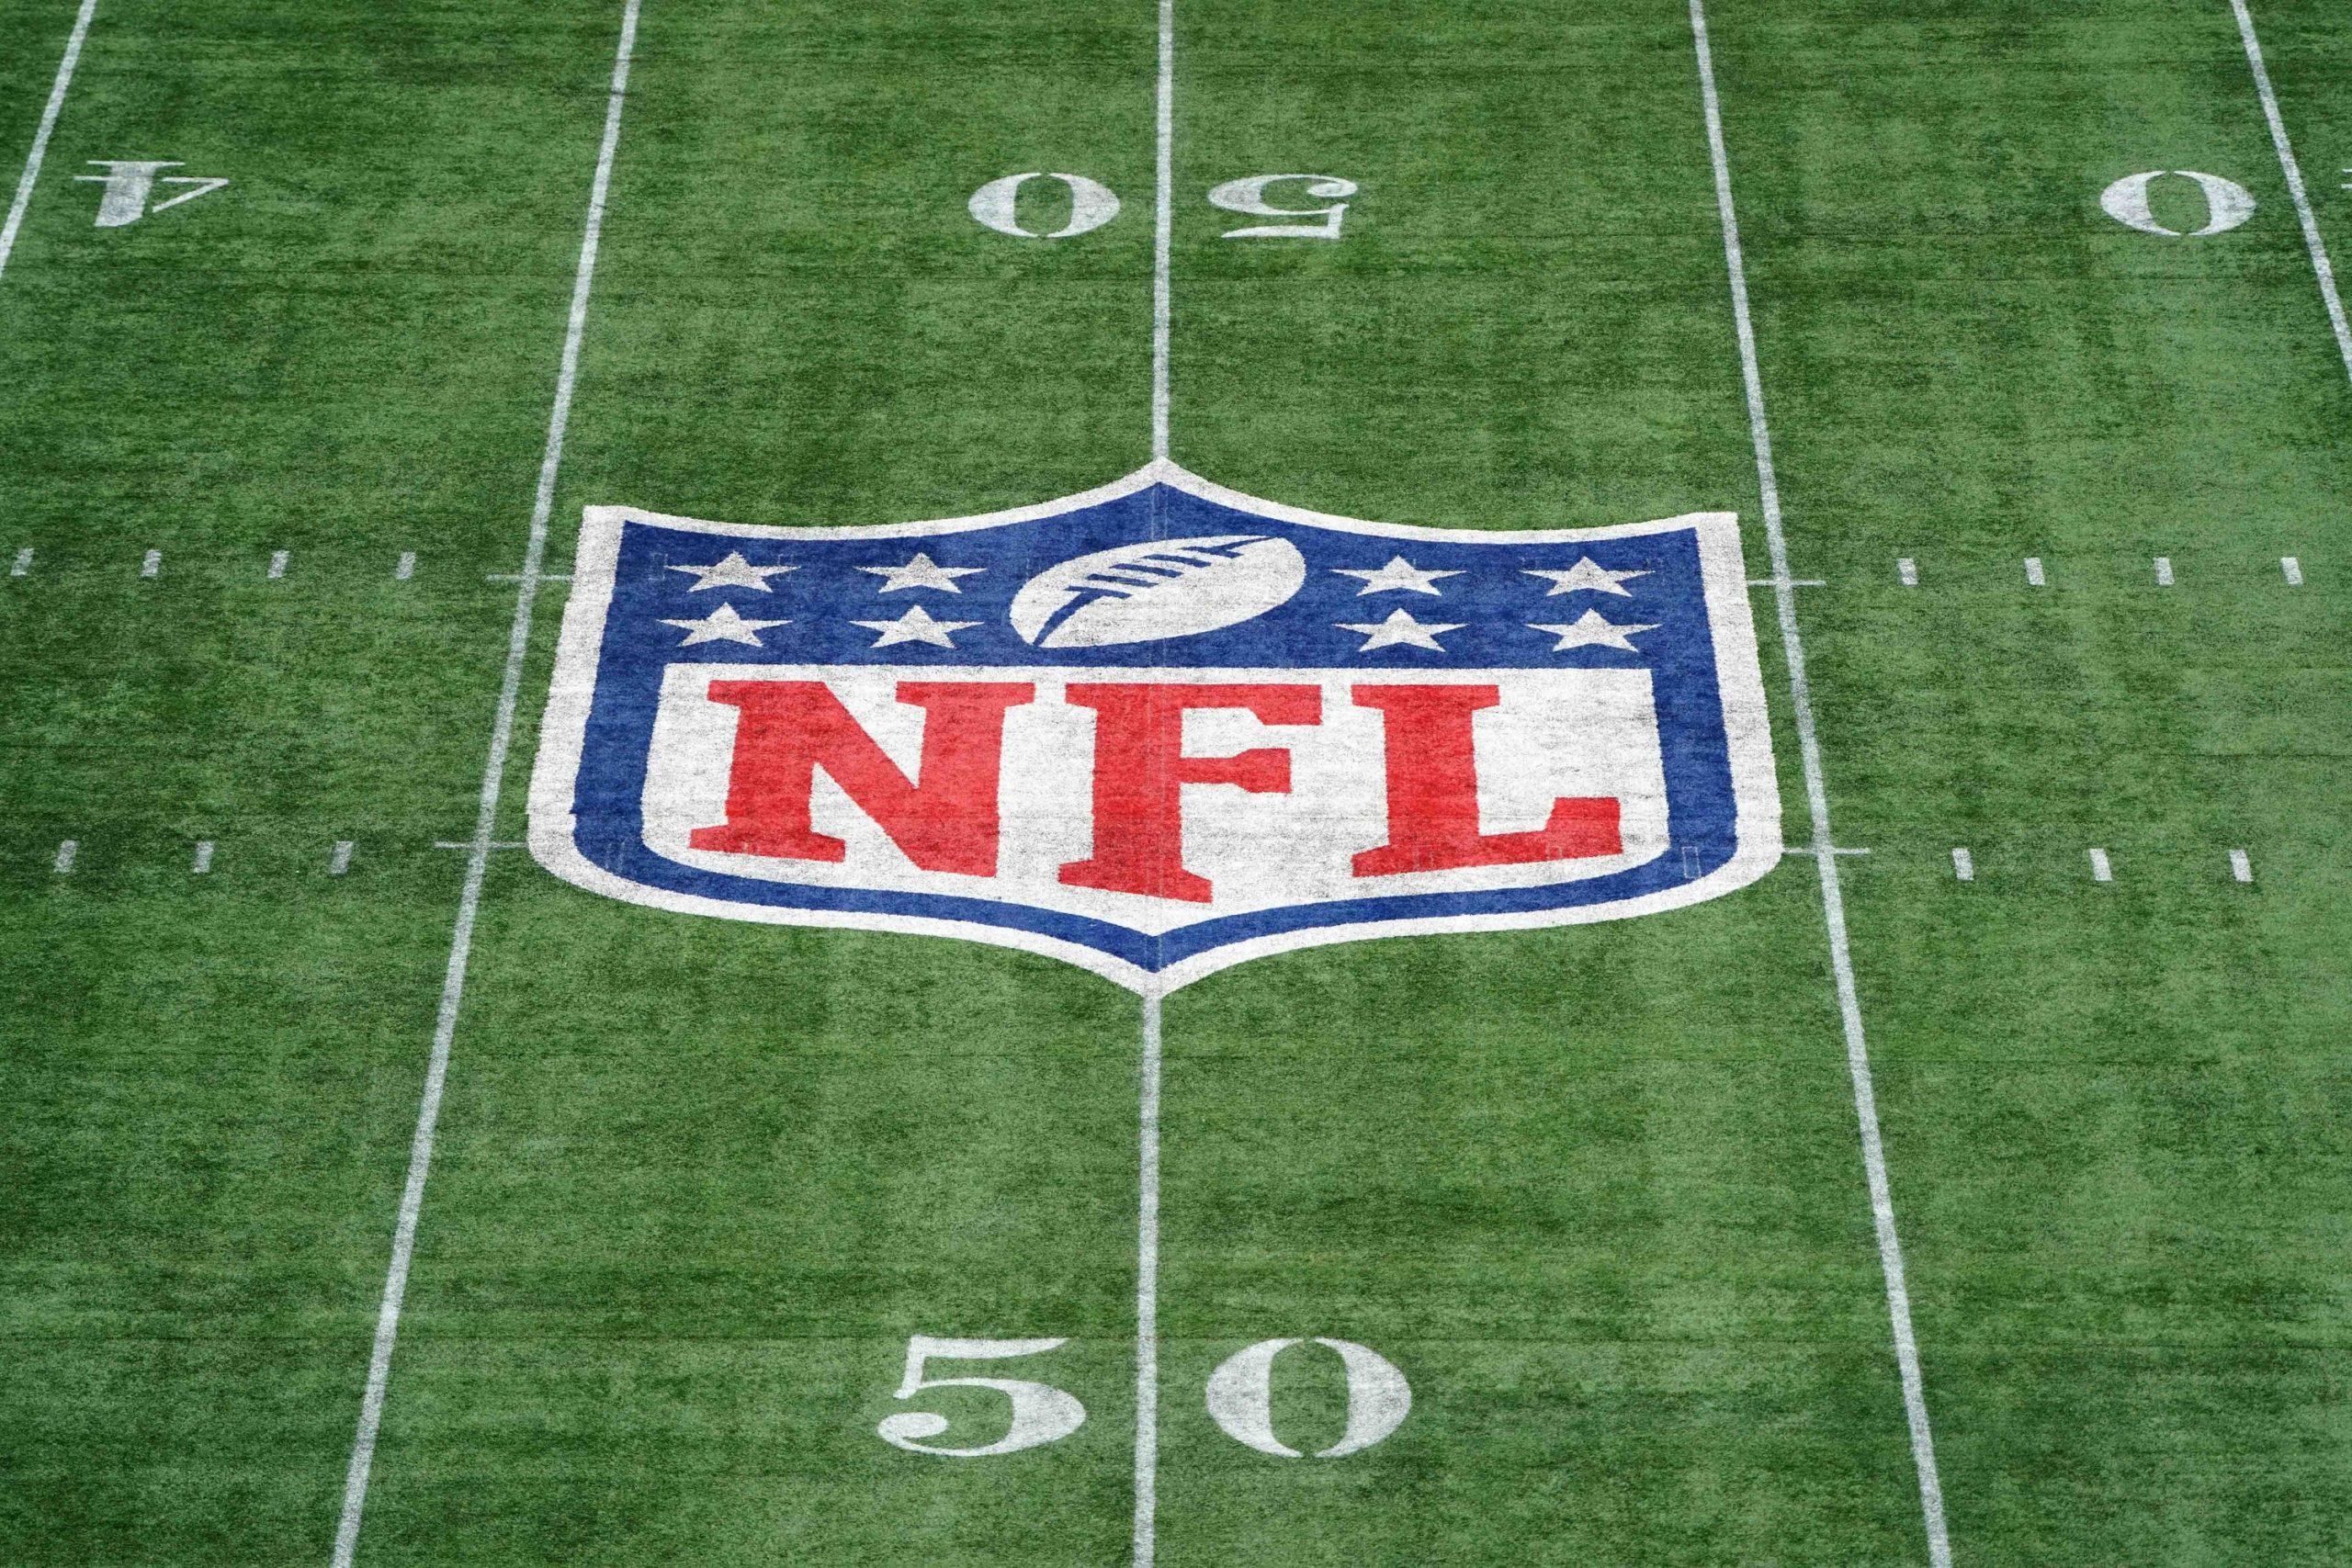 Nova NFL sezona počinje 9. septembra